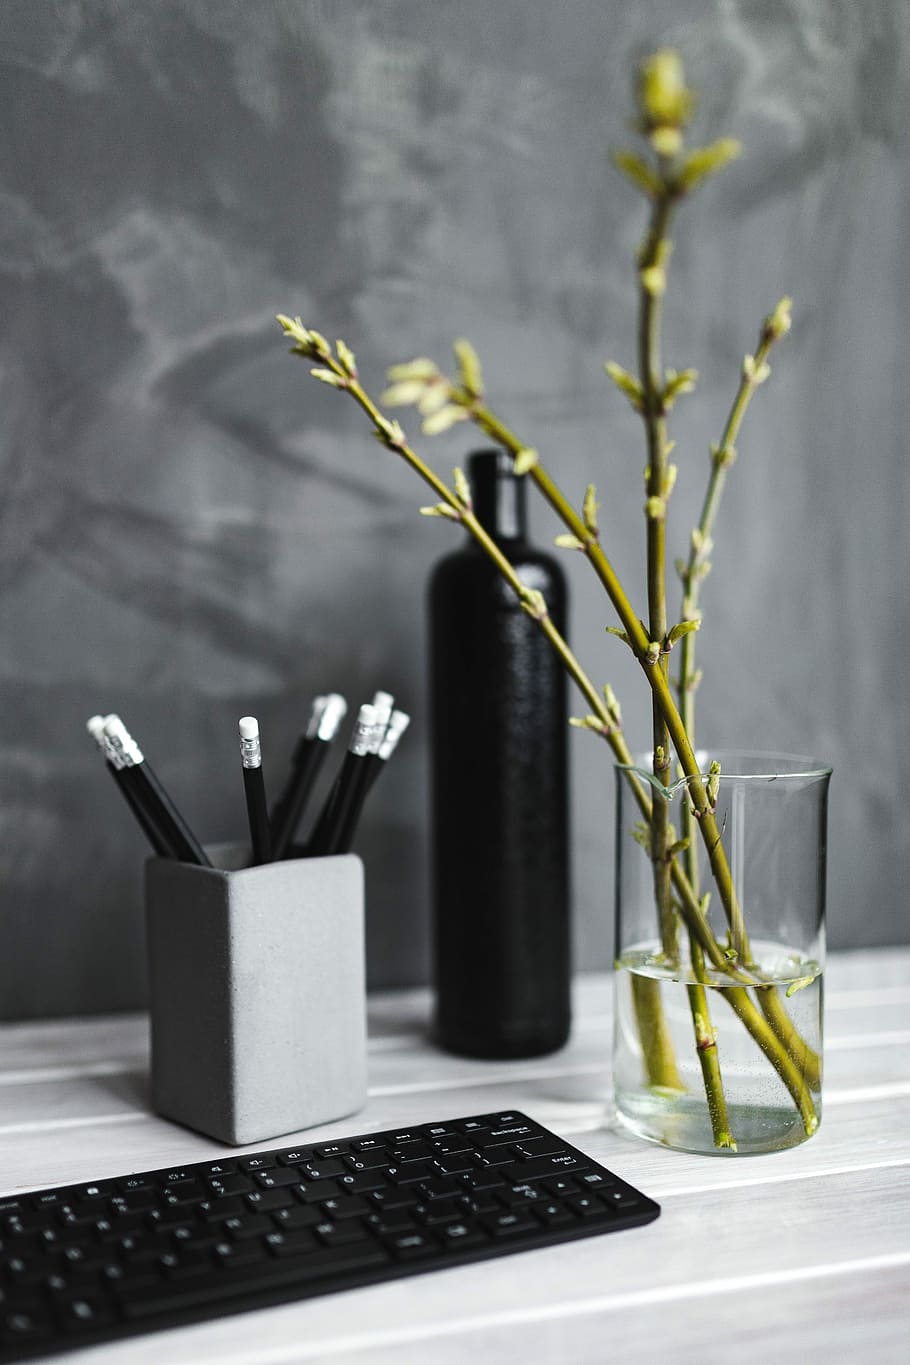 hitam, keyboard, pensil, putih, meja, botol, tanaman, tidak ada Orang, di dalam ruangan, vas